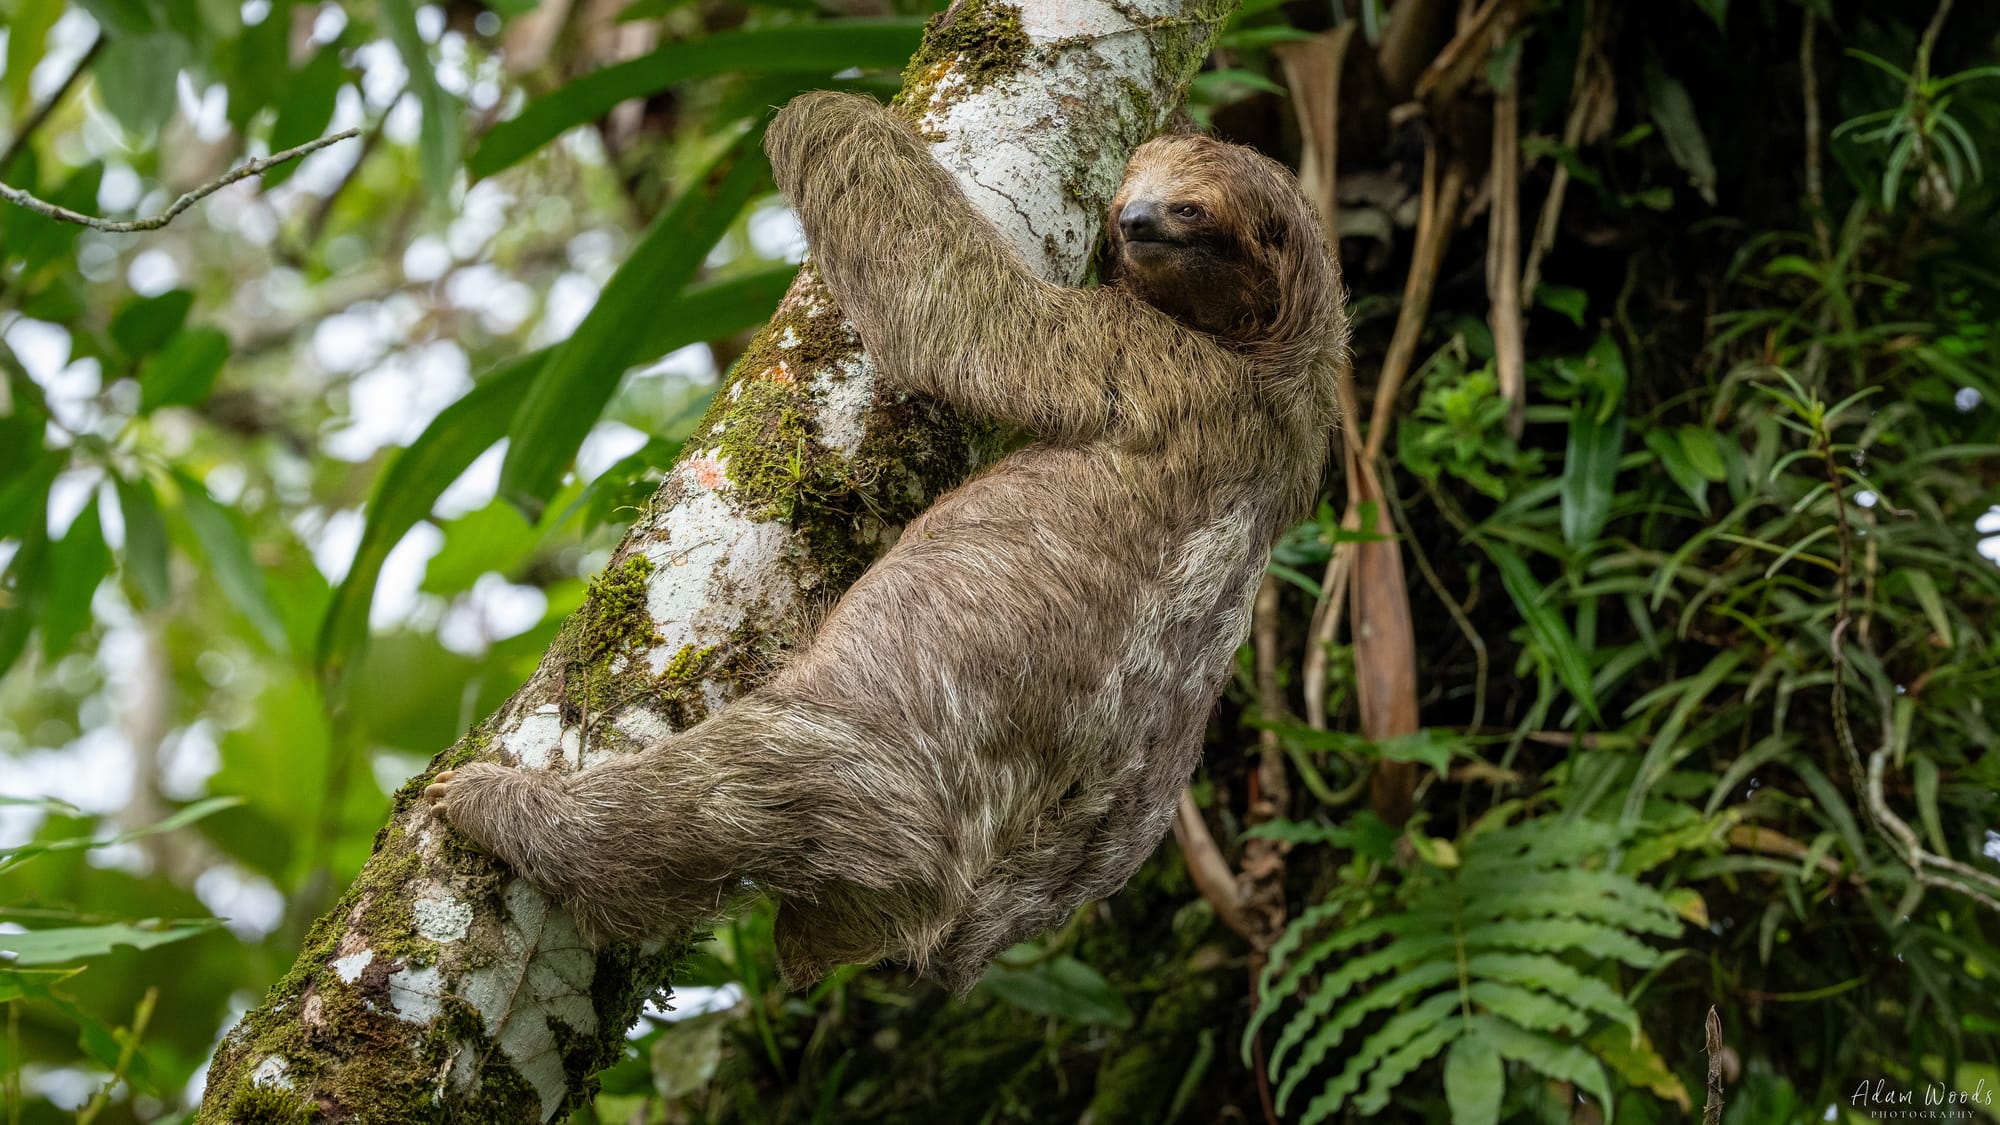 More Sloths!